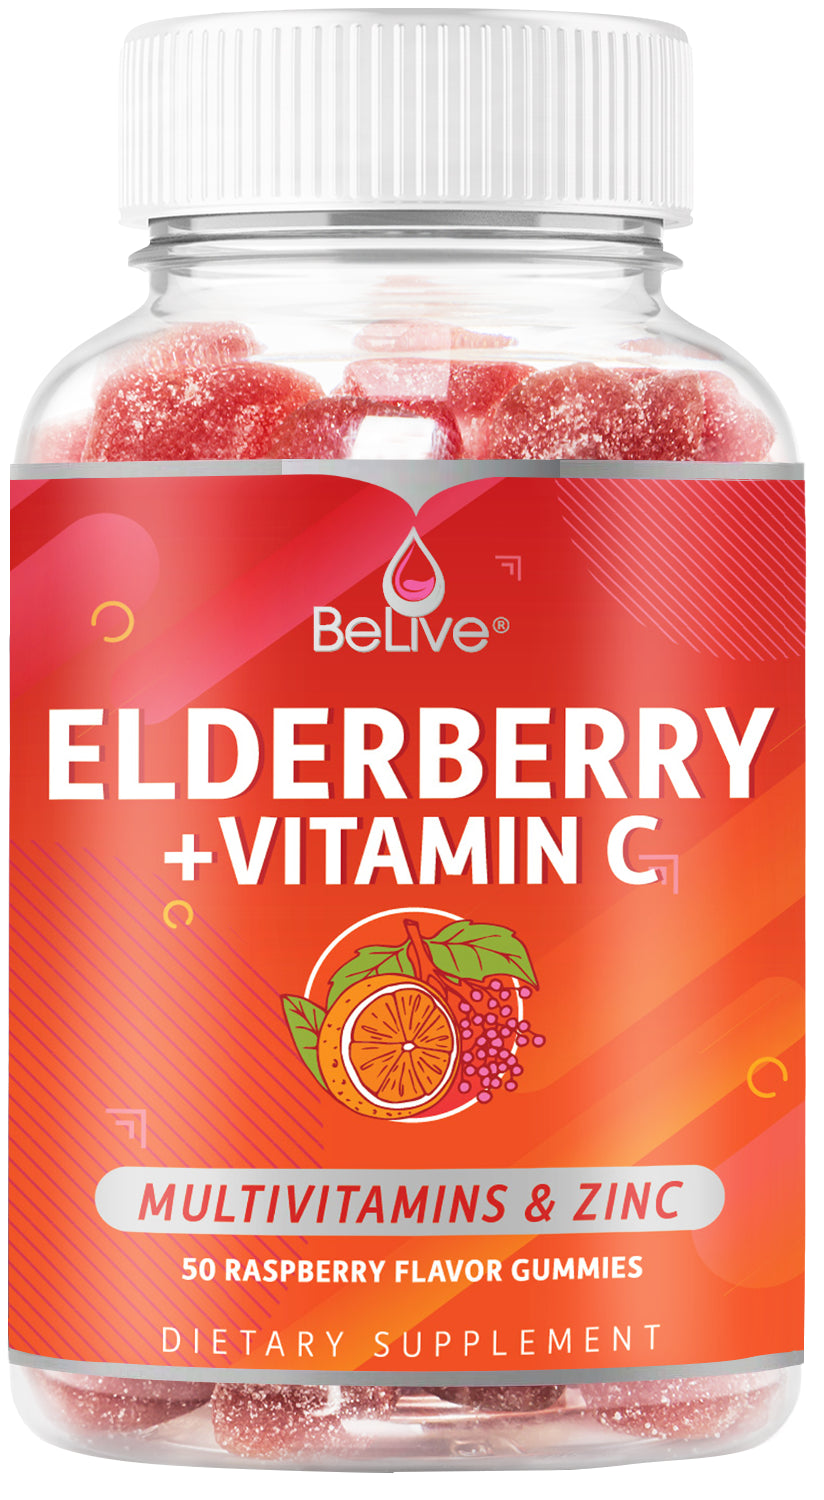 Belive Elderberry Gummies with Vitamin C – Double Strength Elderberry with Immune Boosting Vitamin D, B-Complex, and Zinc - Raspberry Flavor (50 Count)